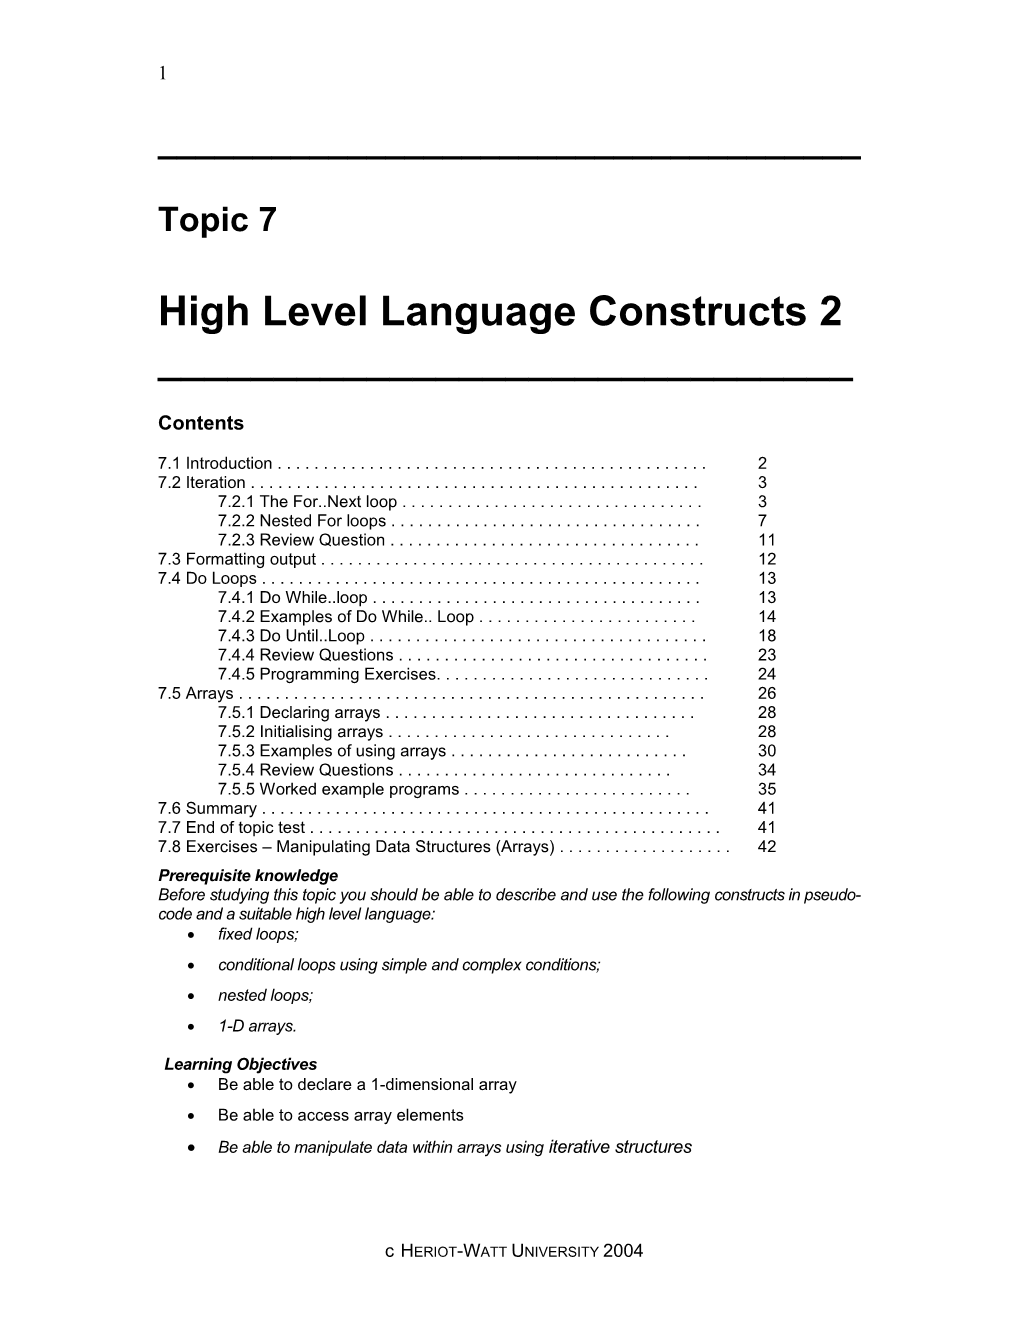 High Level Language Constructs 2